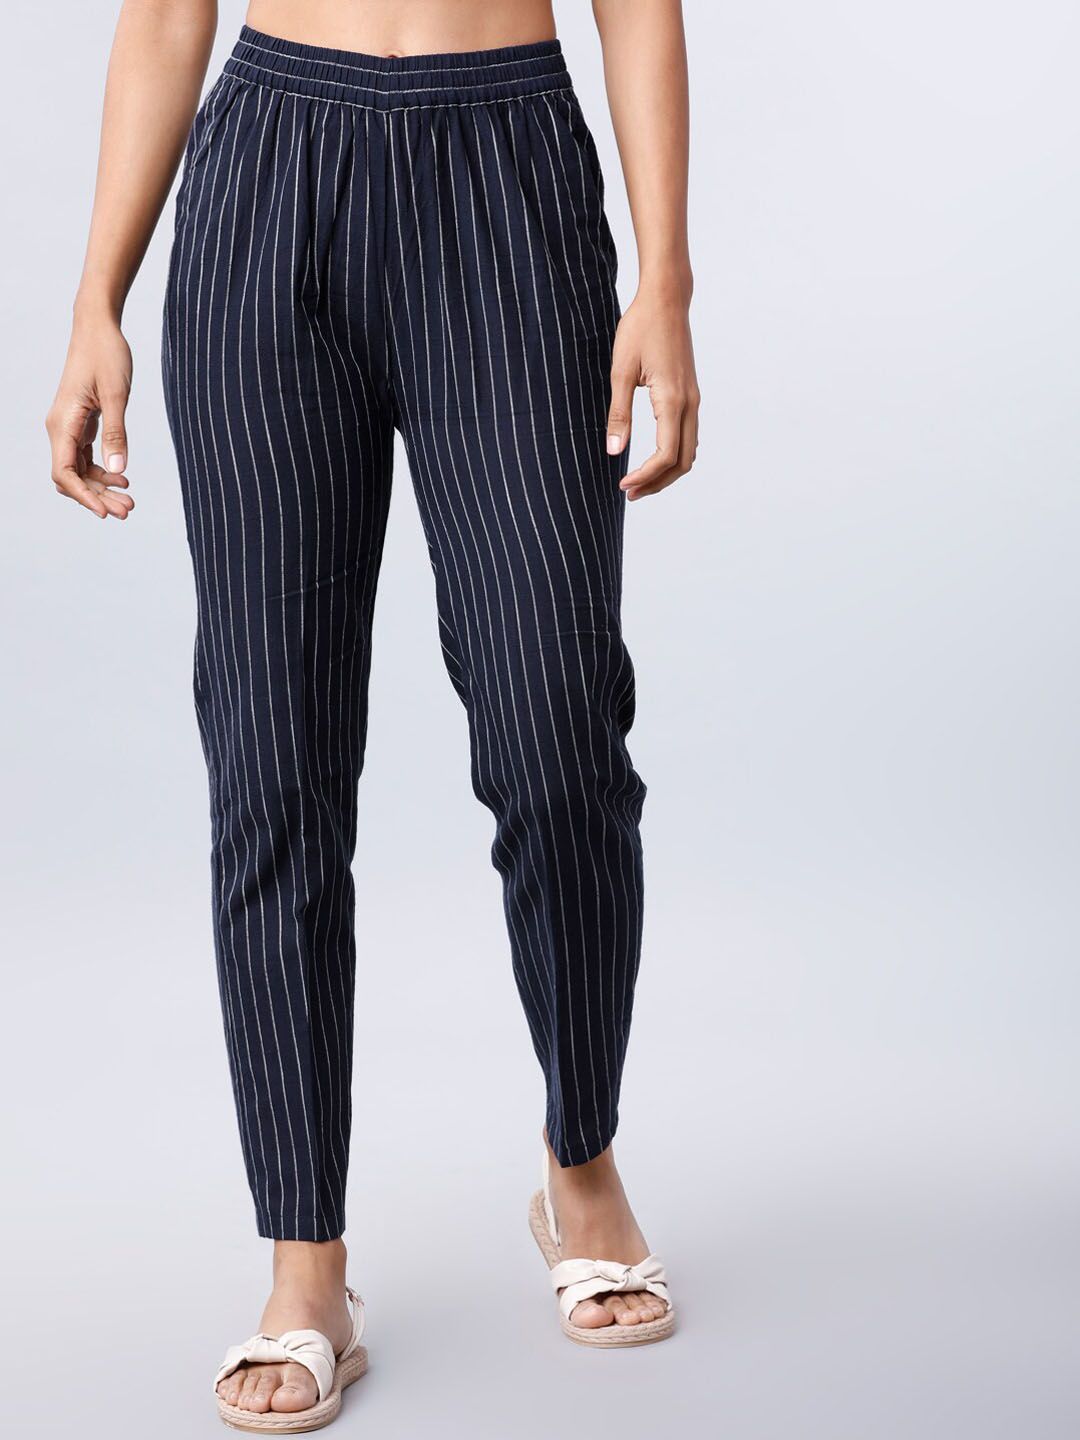 Vishudh Women Navy Blue & Off-White Regular Fit Striped Regular Trousers Price in India